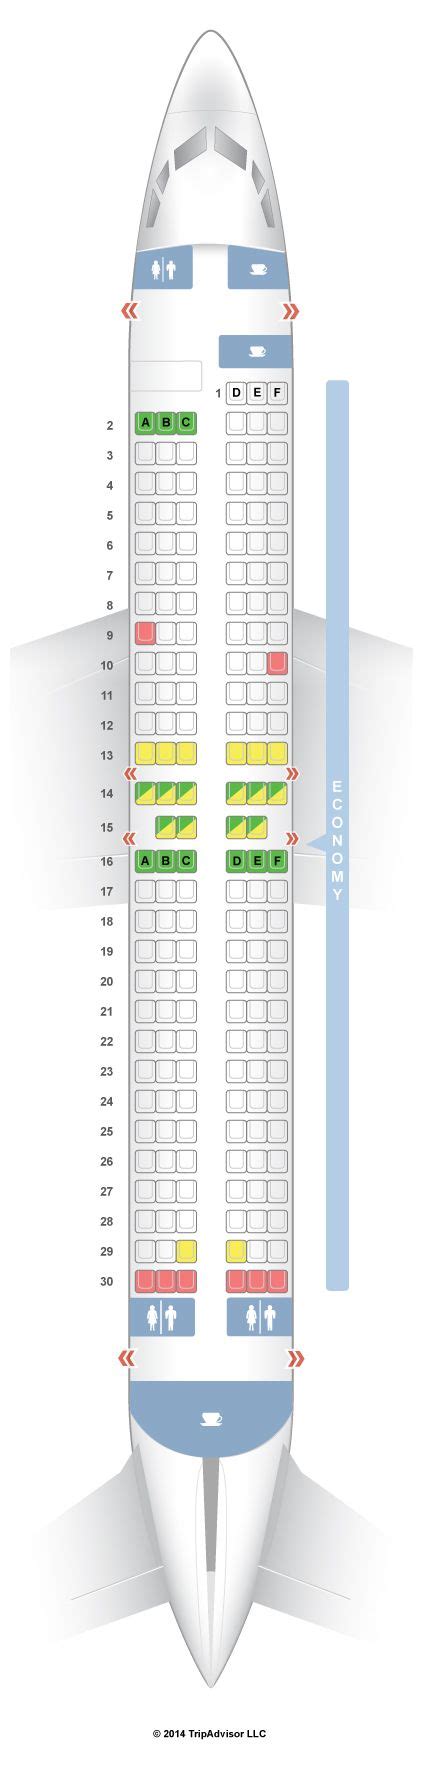 737 Max 8 Seating Chart